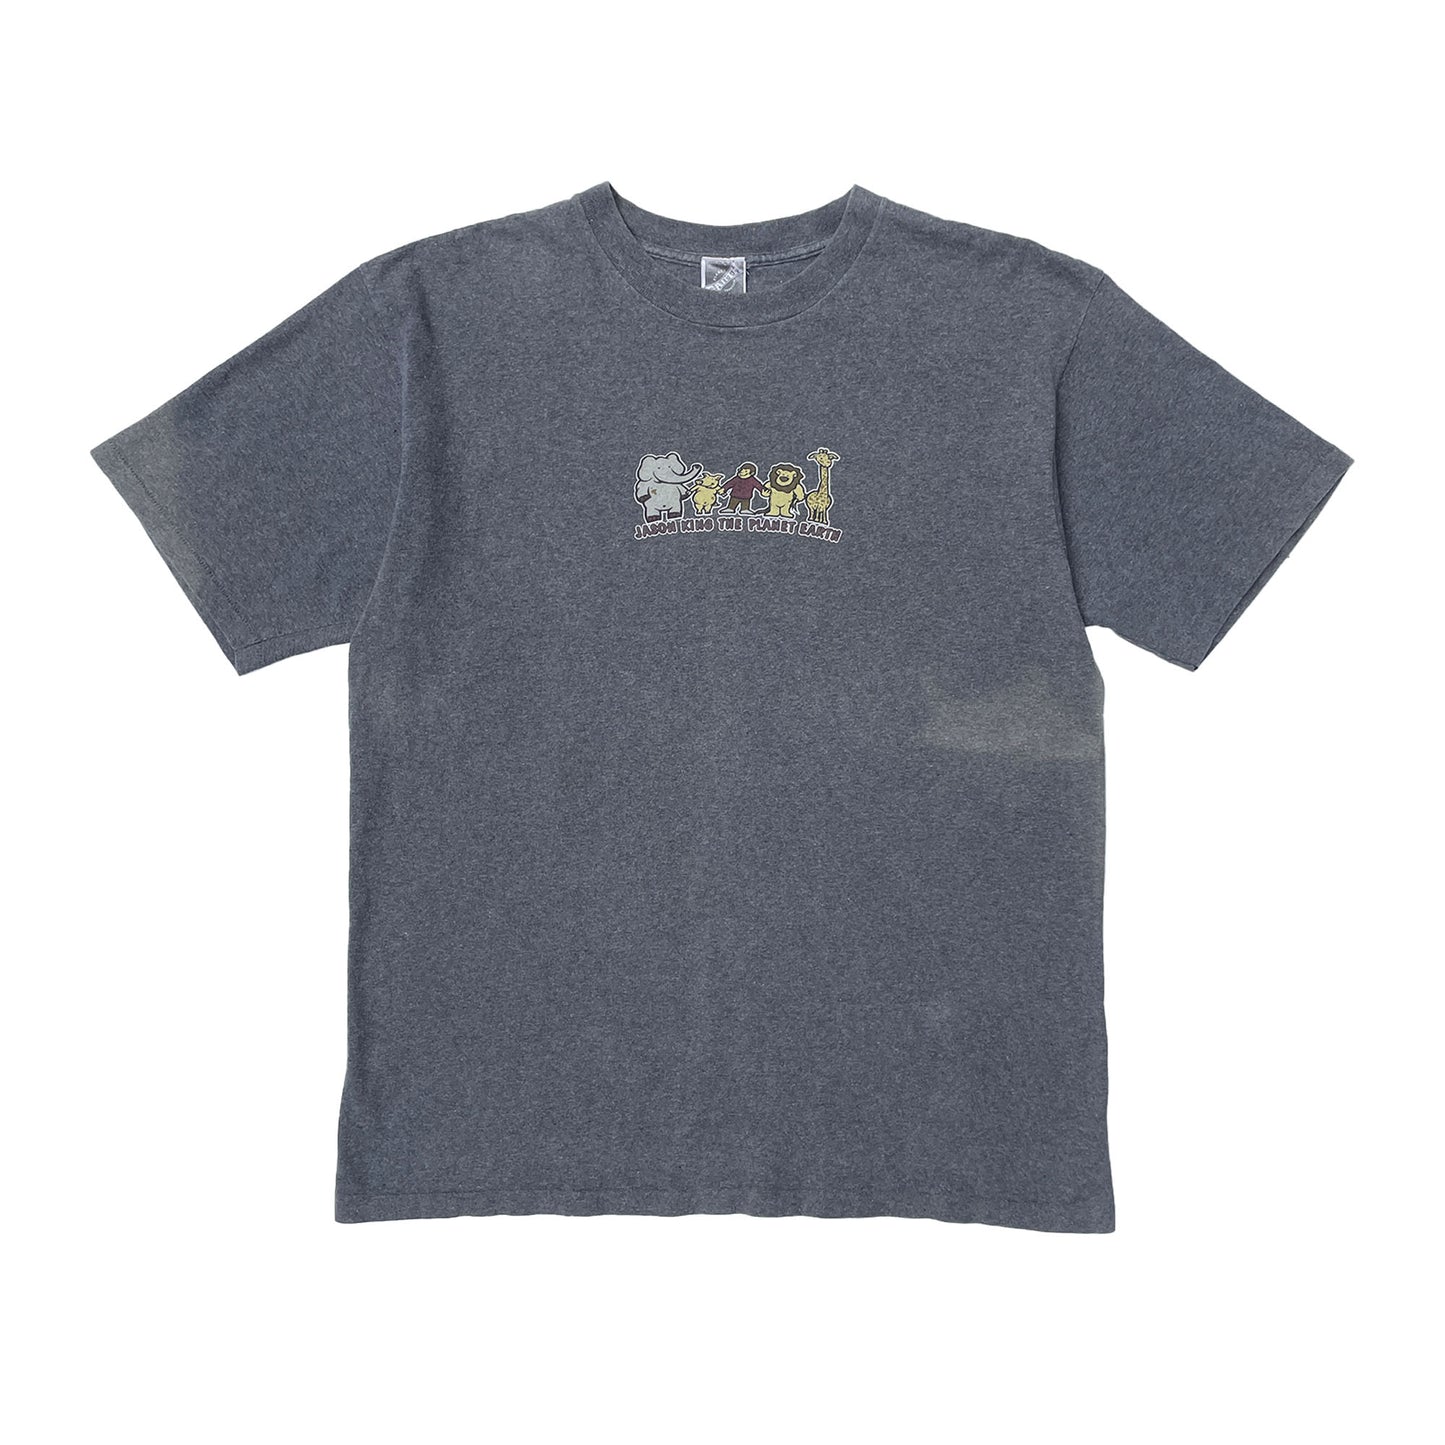 Planet Earth Jason King 'United' Single Stitched T-Shirt (Heather Grey) VINTAGE 90s